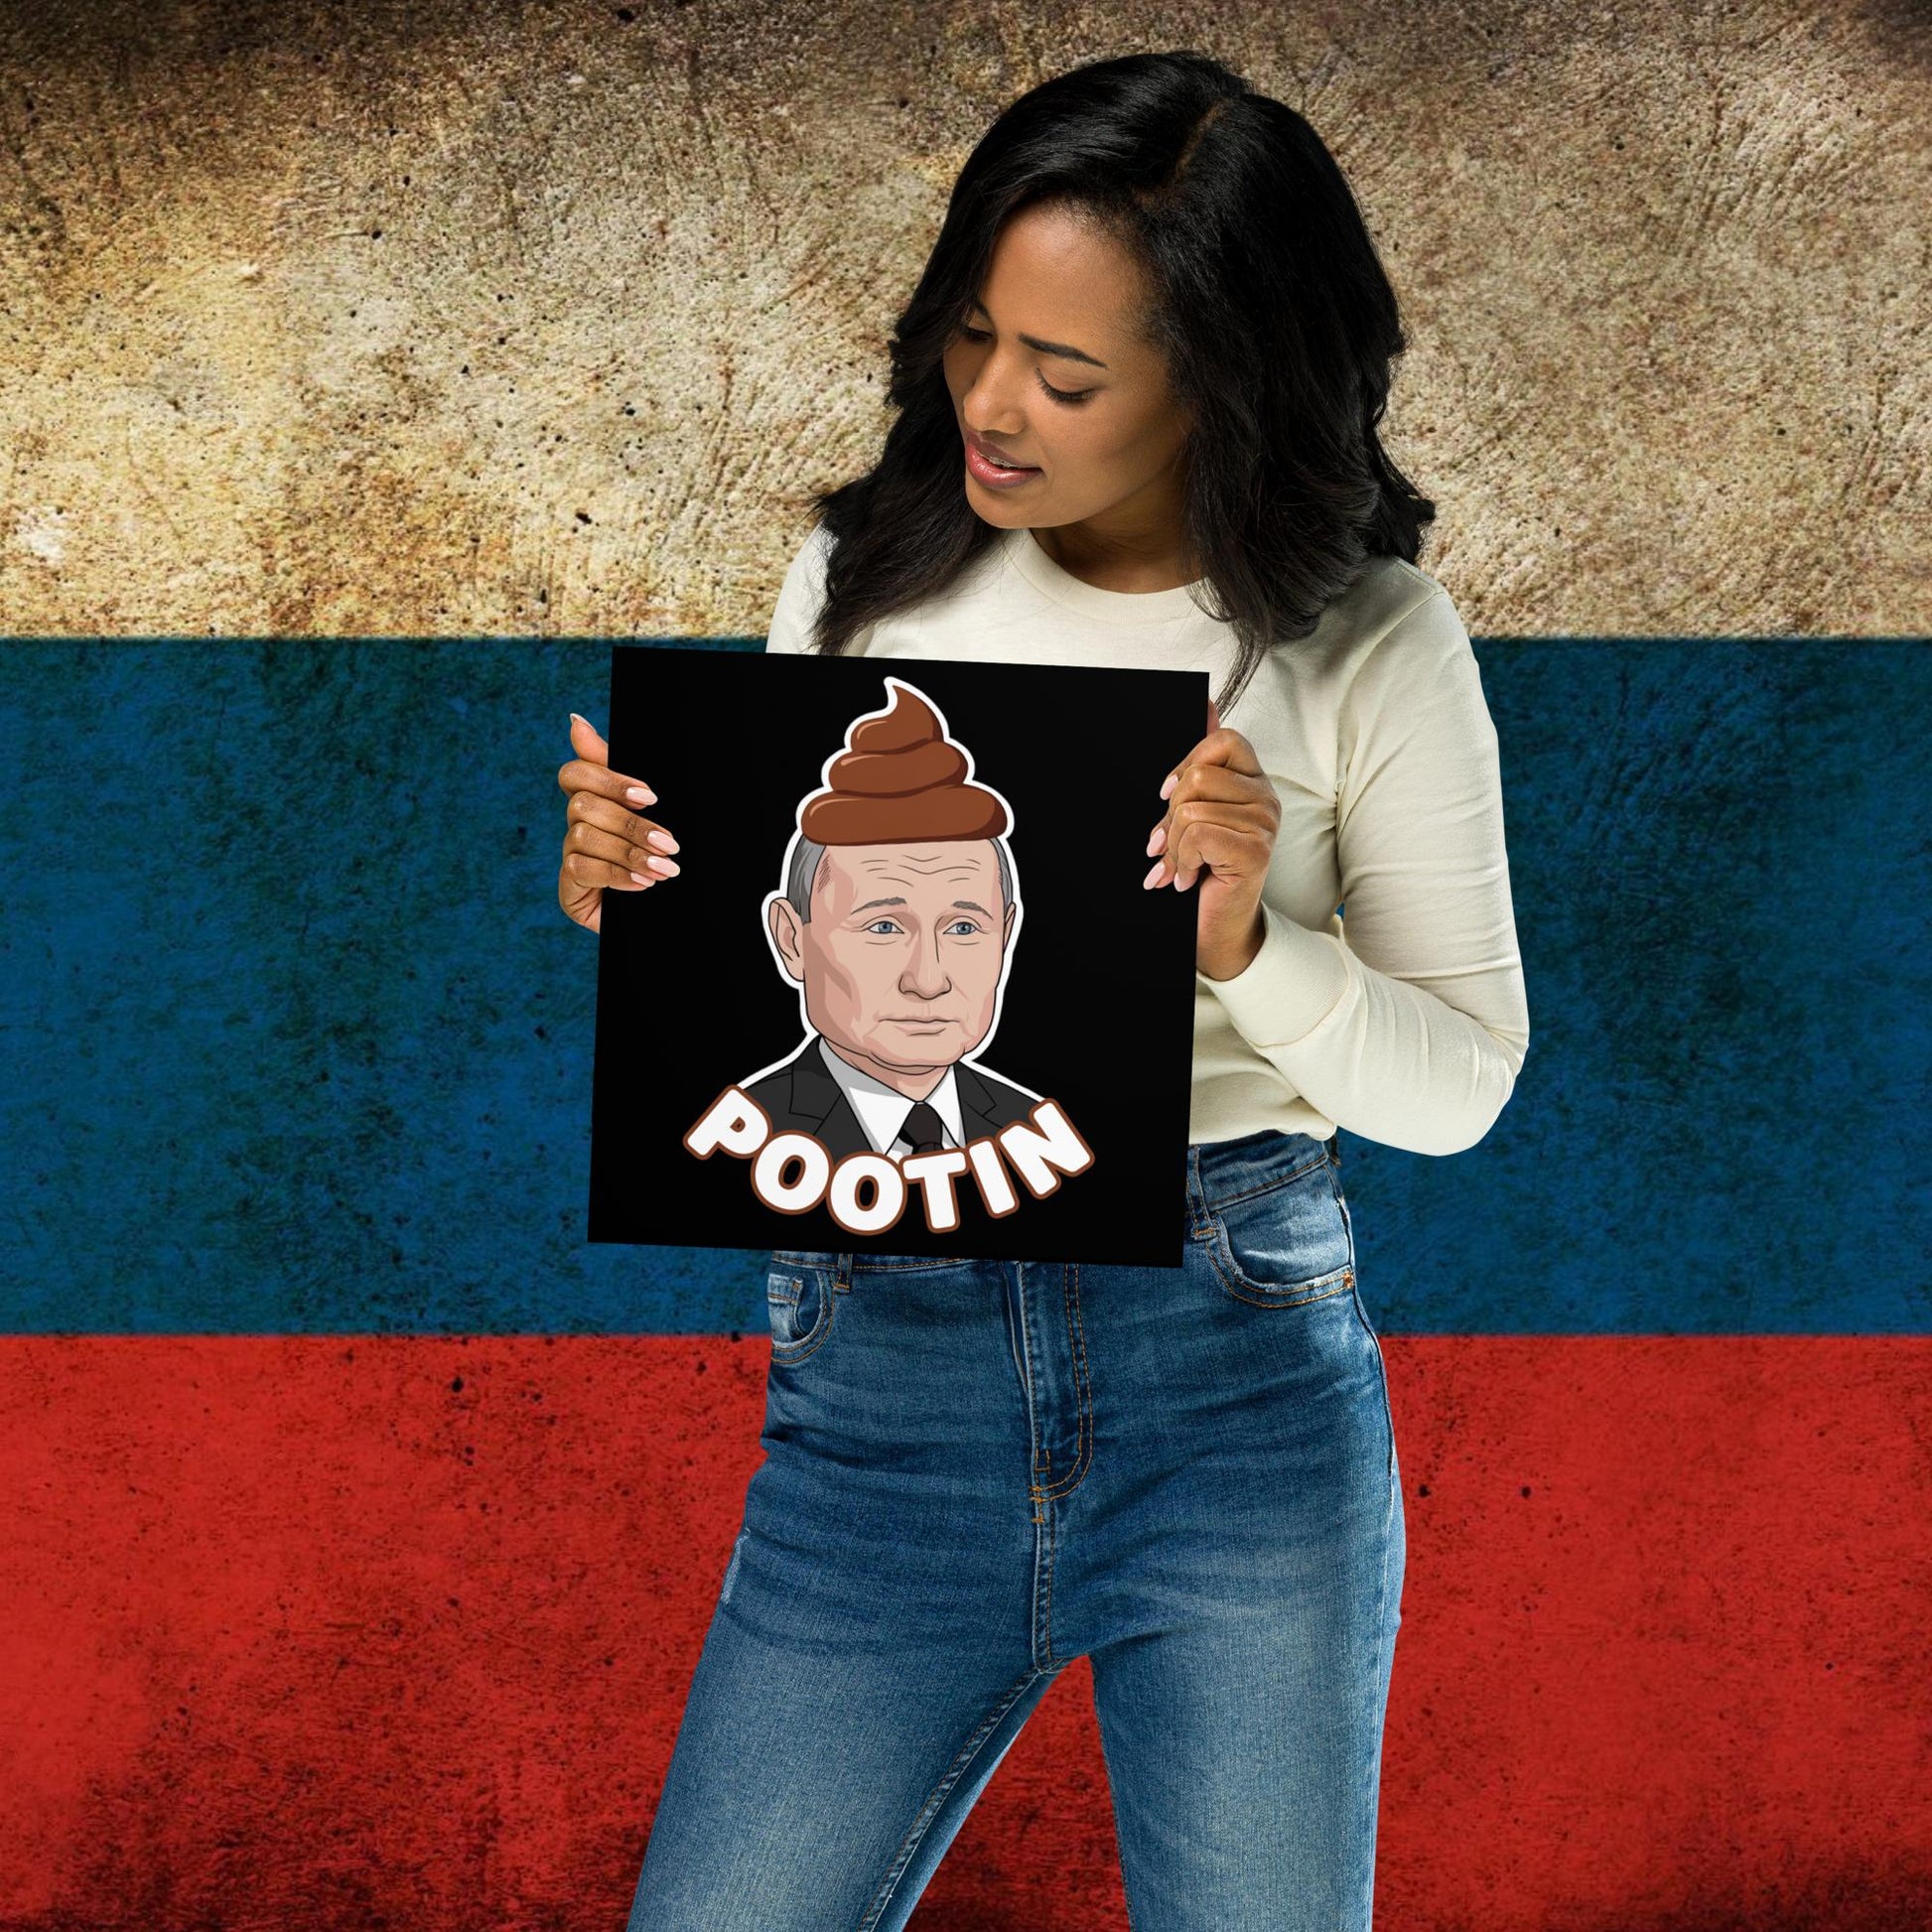 Pootin Funny Anti Vladimir Putin Poster Next Cult Brand